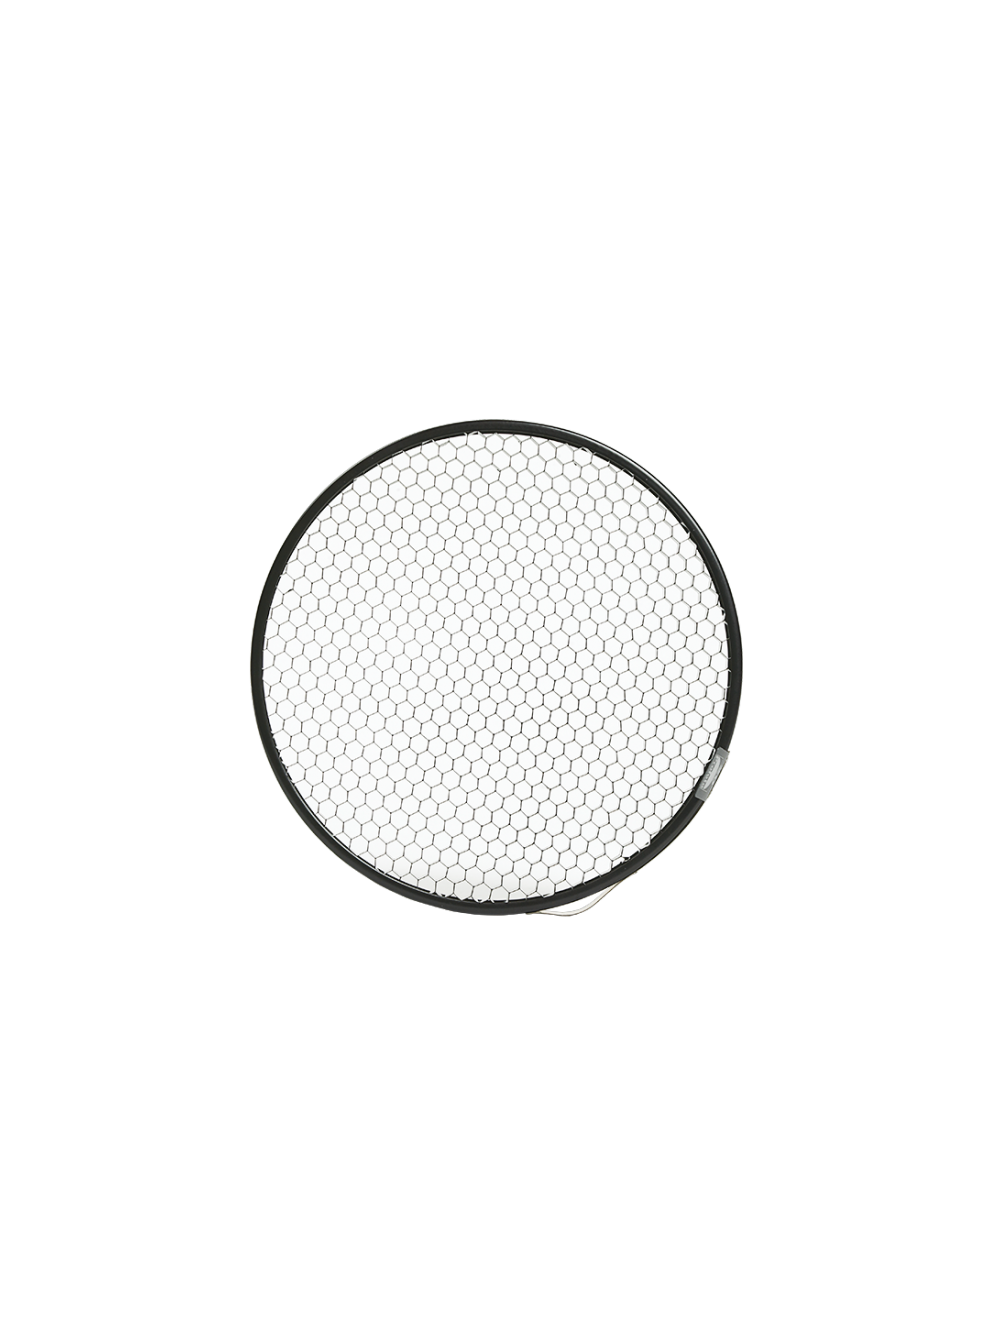 Profoto Honeycomb Grid 180mm (20 degrees) | Borge's Imaging